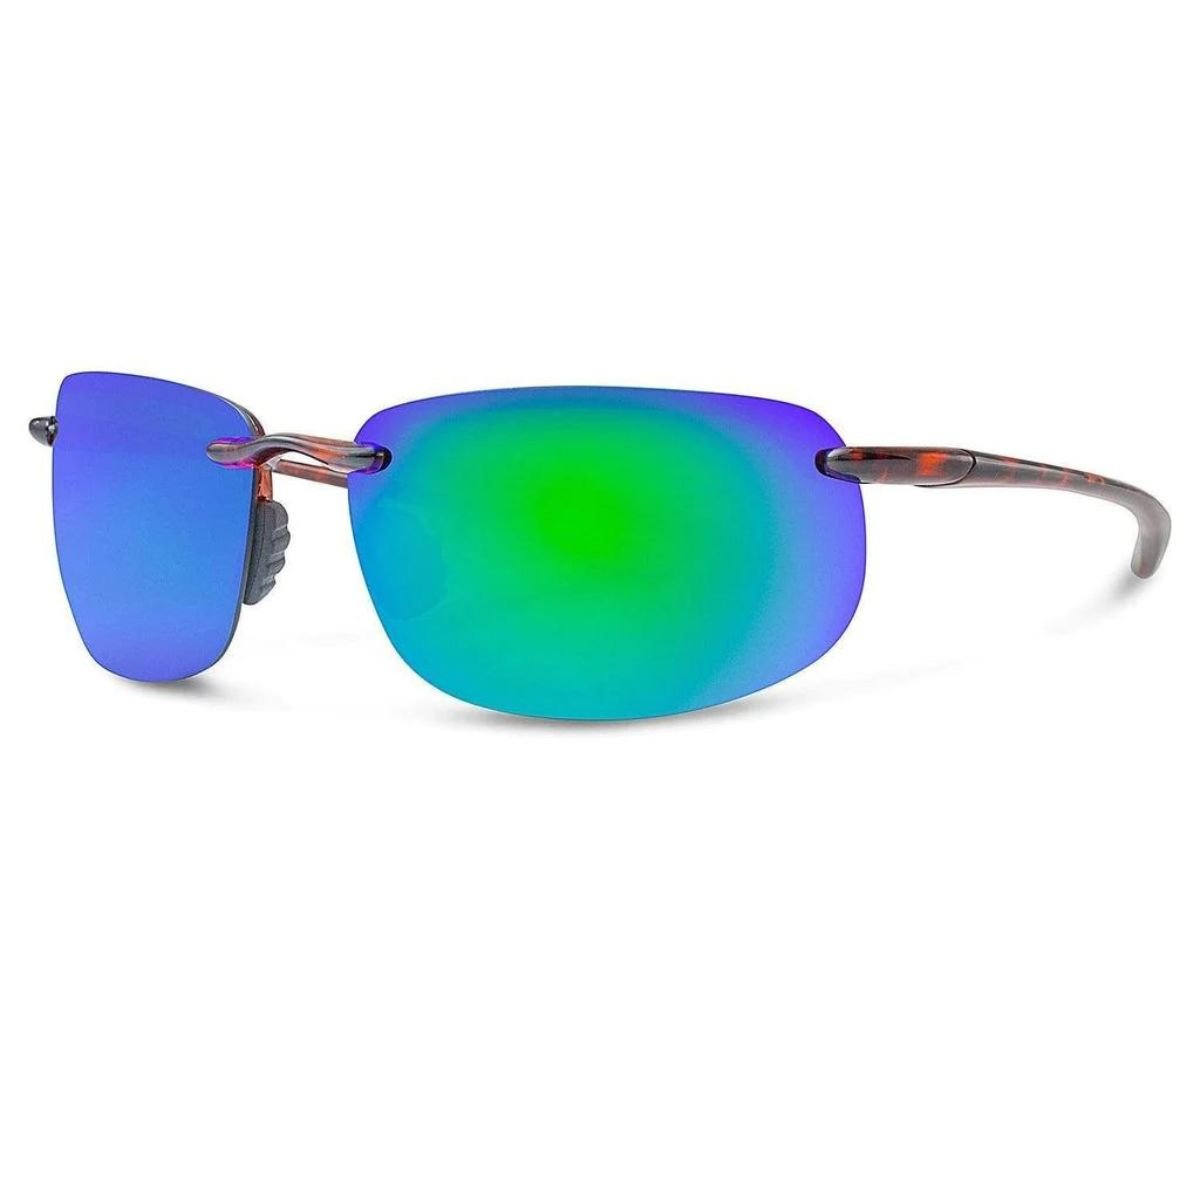 Abaco Outrigger Sunglasses in Tortoise/Ocean Mirror - BoardCo